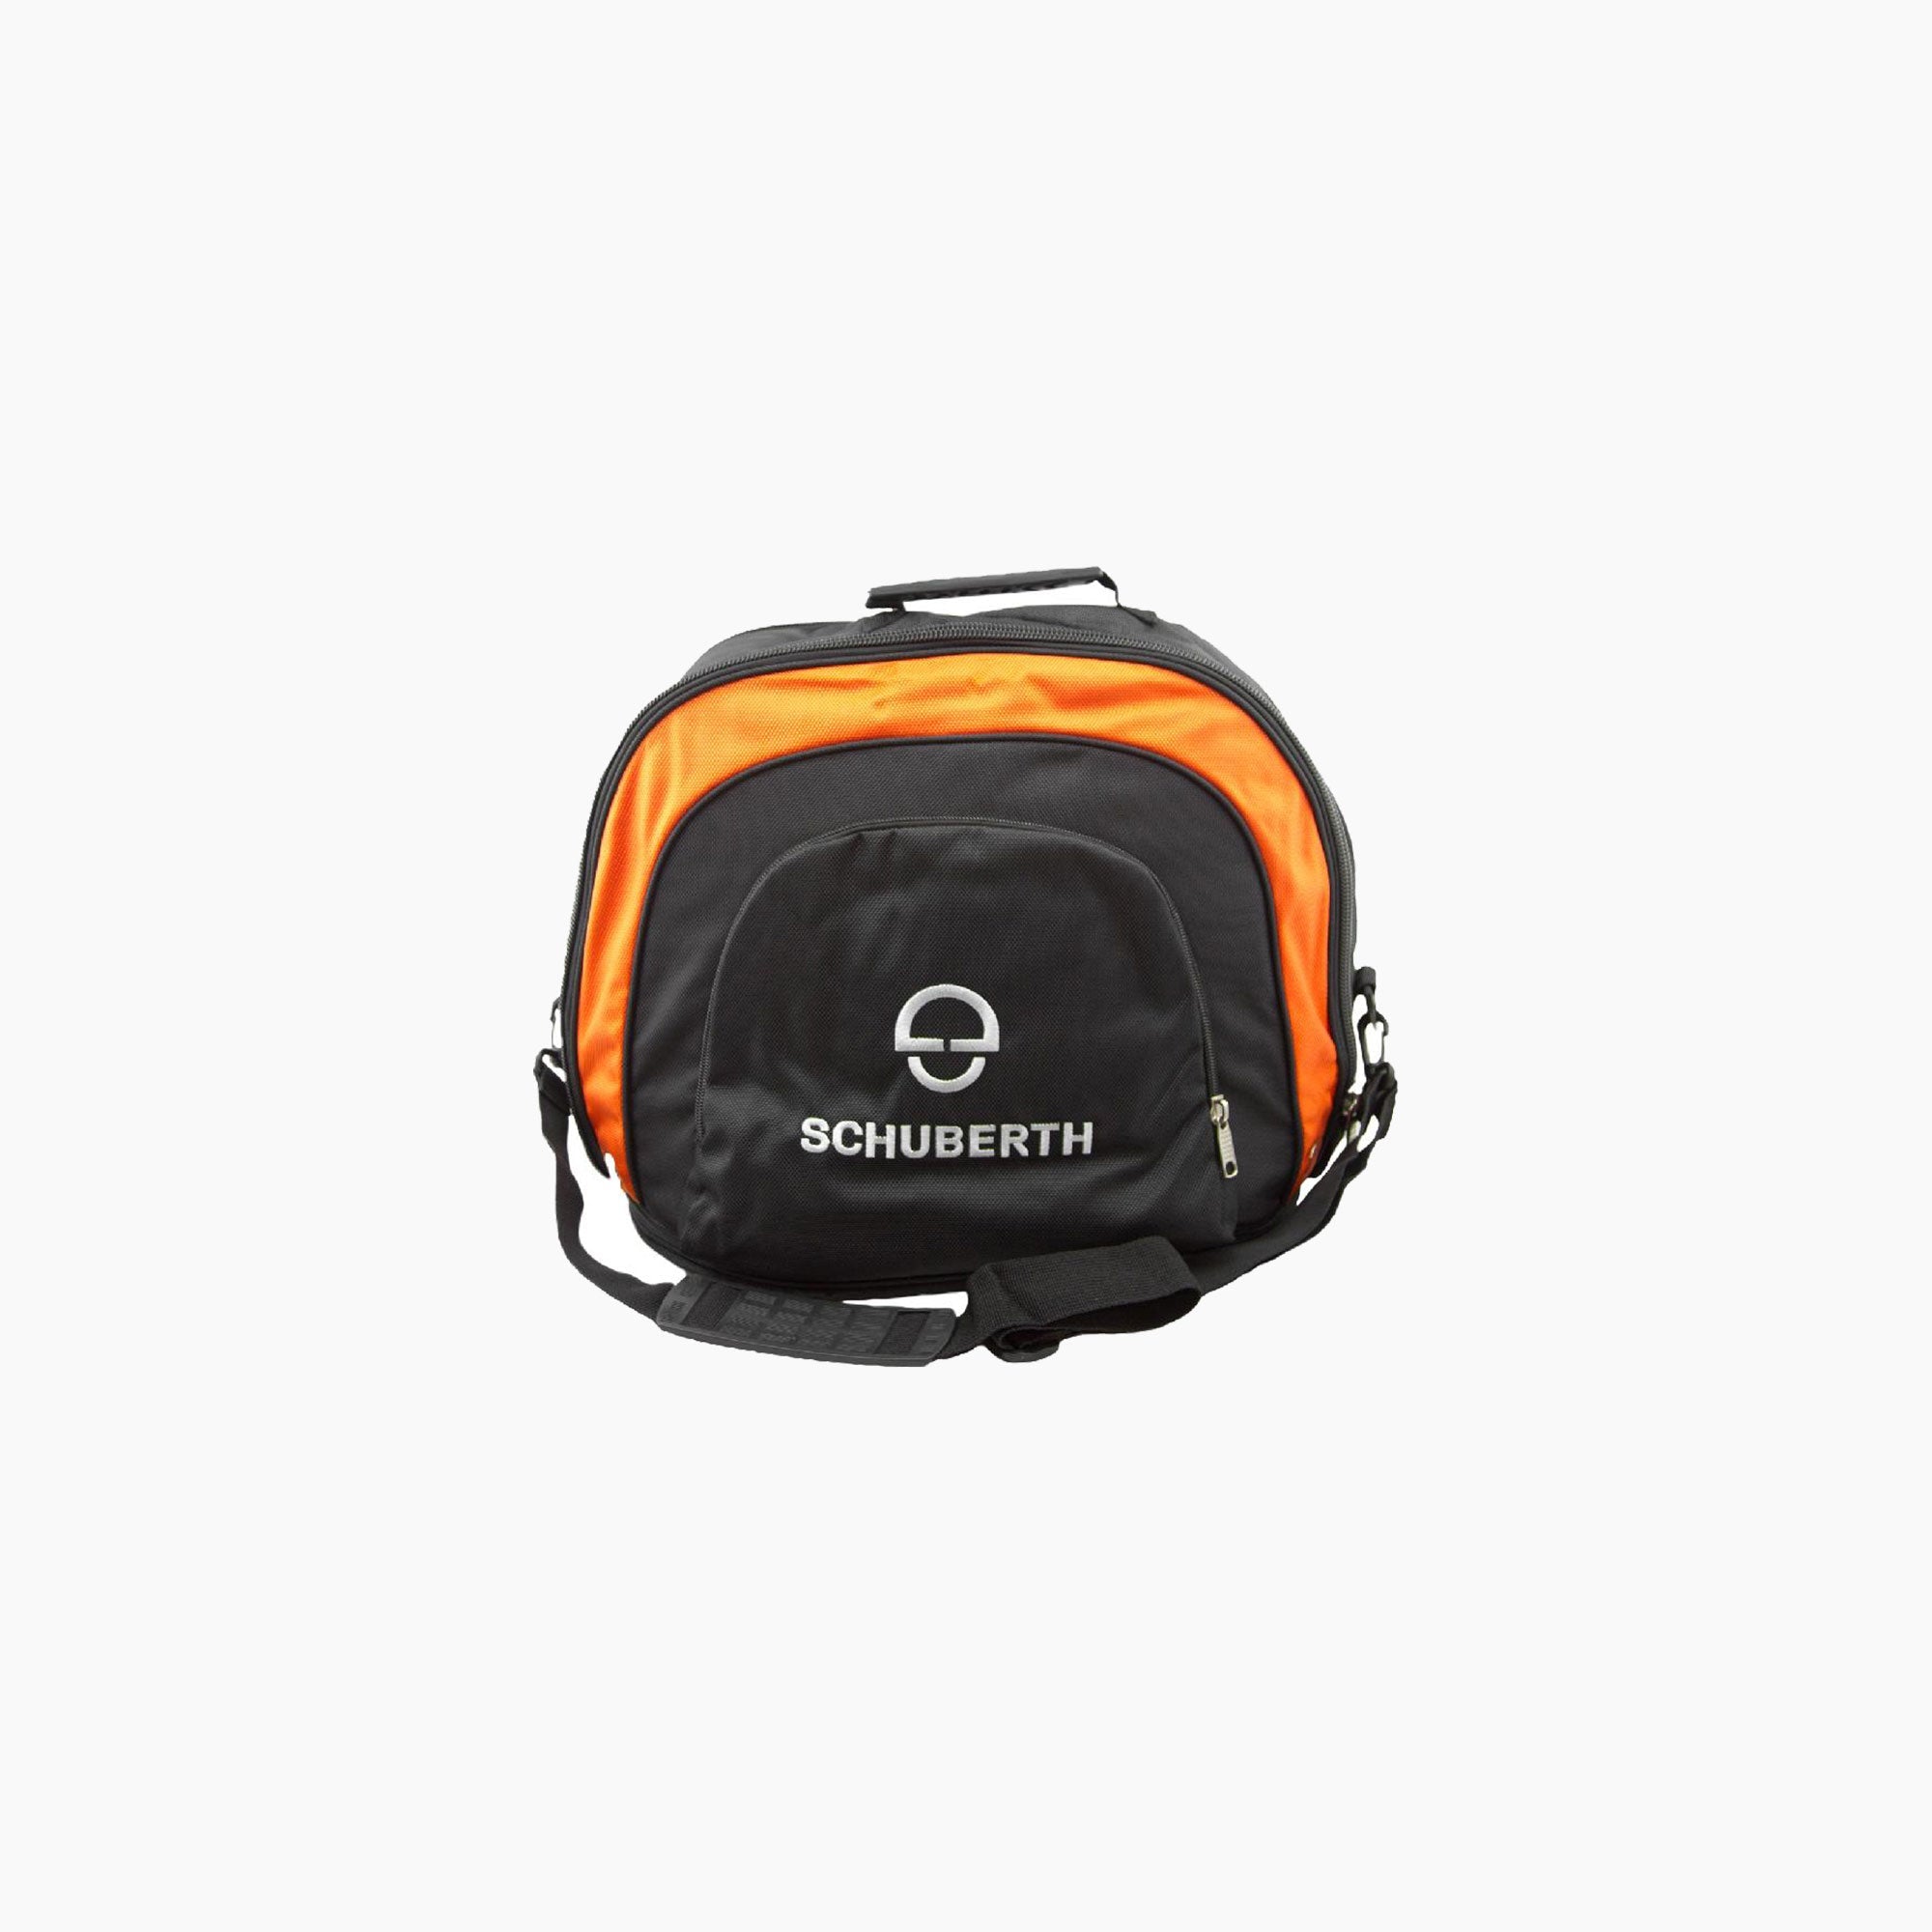 Shuberth | Helmet Bag-Bag-Schuberth-gpx-store